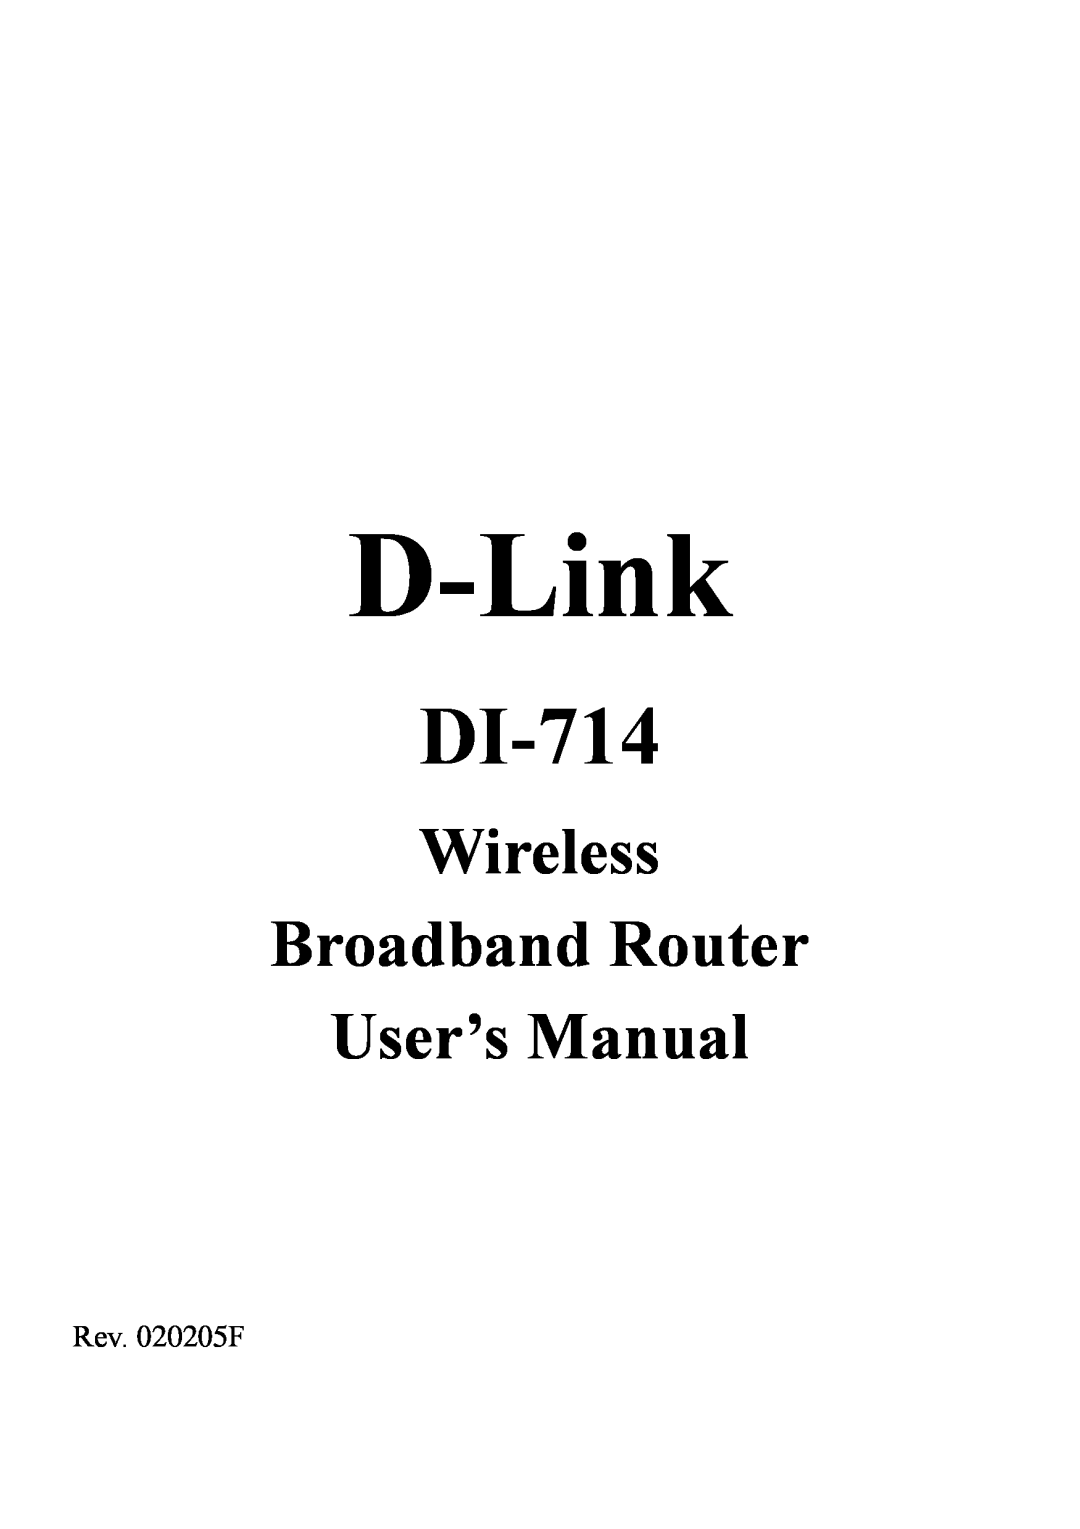 D-Link DI-714 user manual D-Link, Wireless Broadband Router User’s Manual 